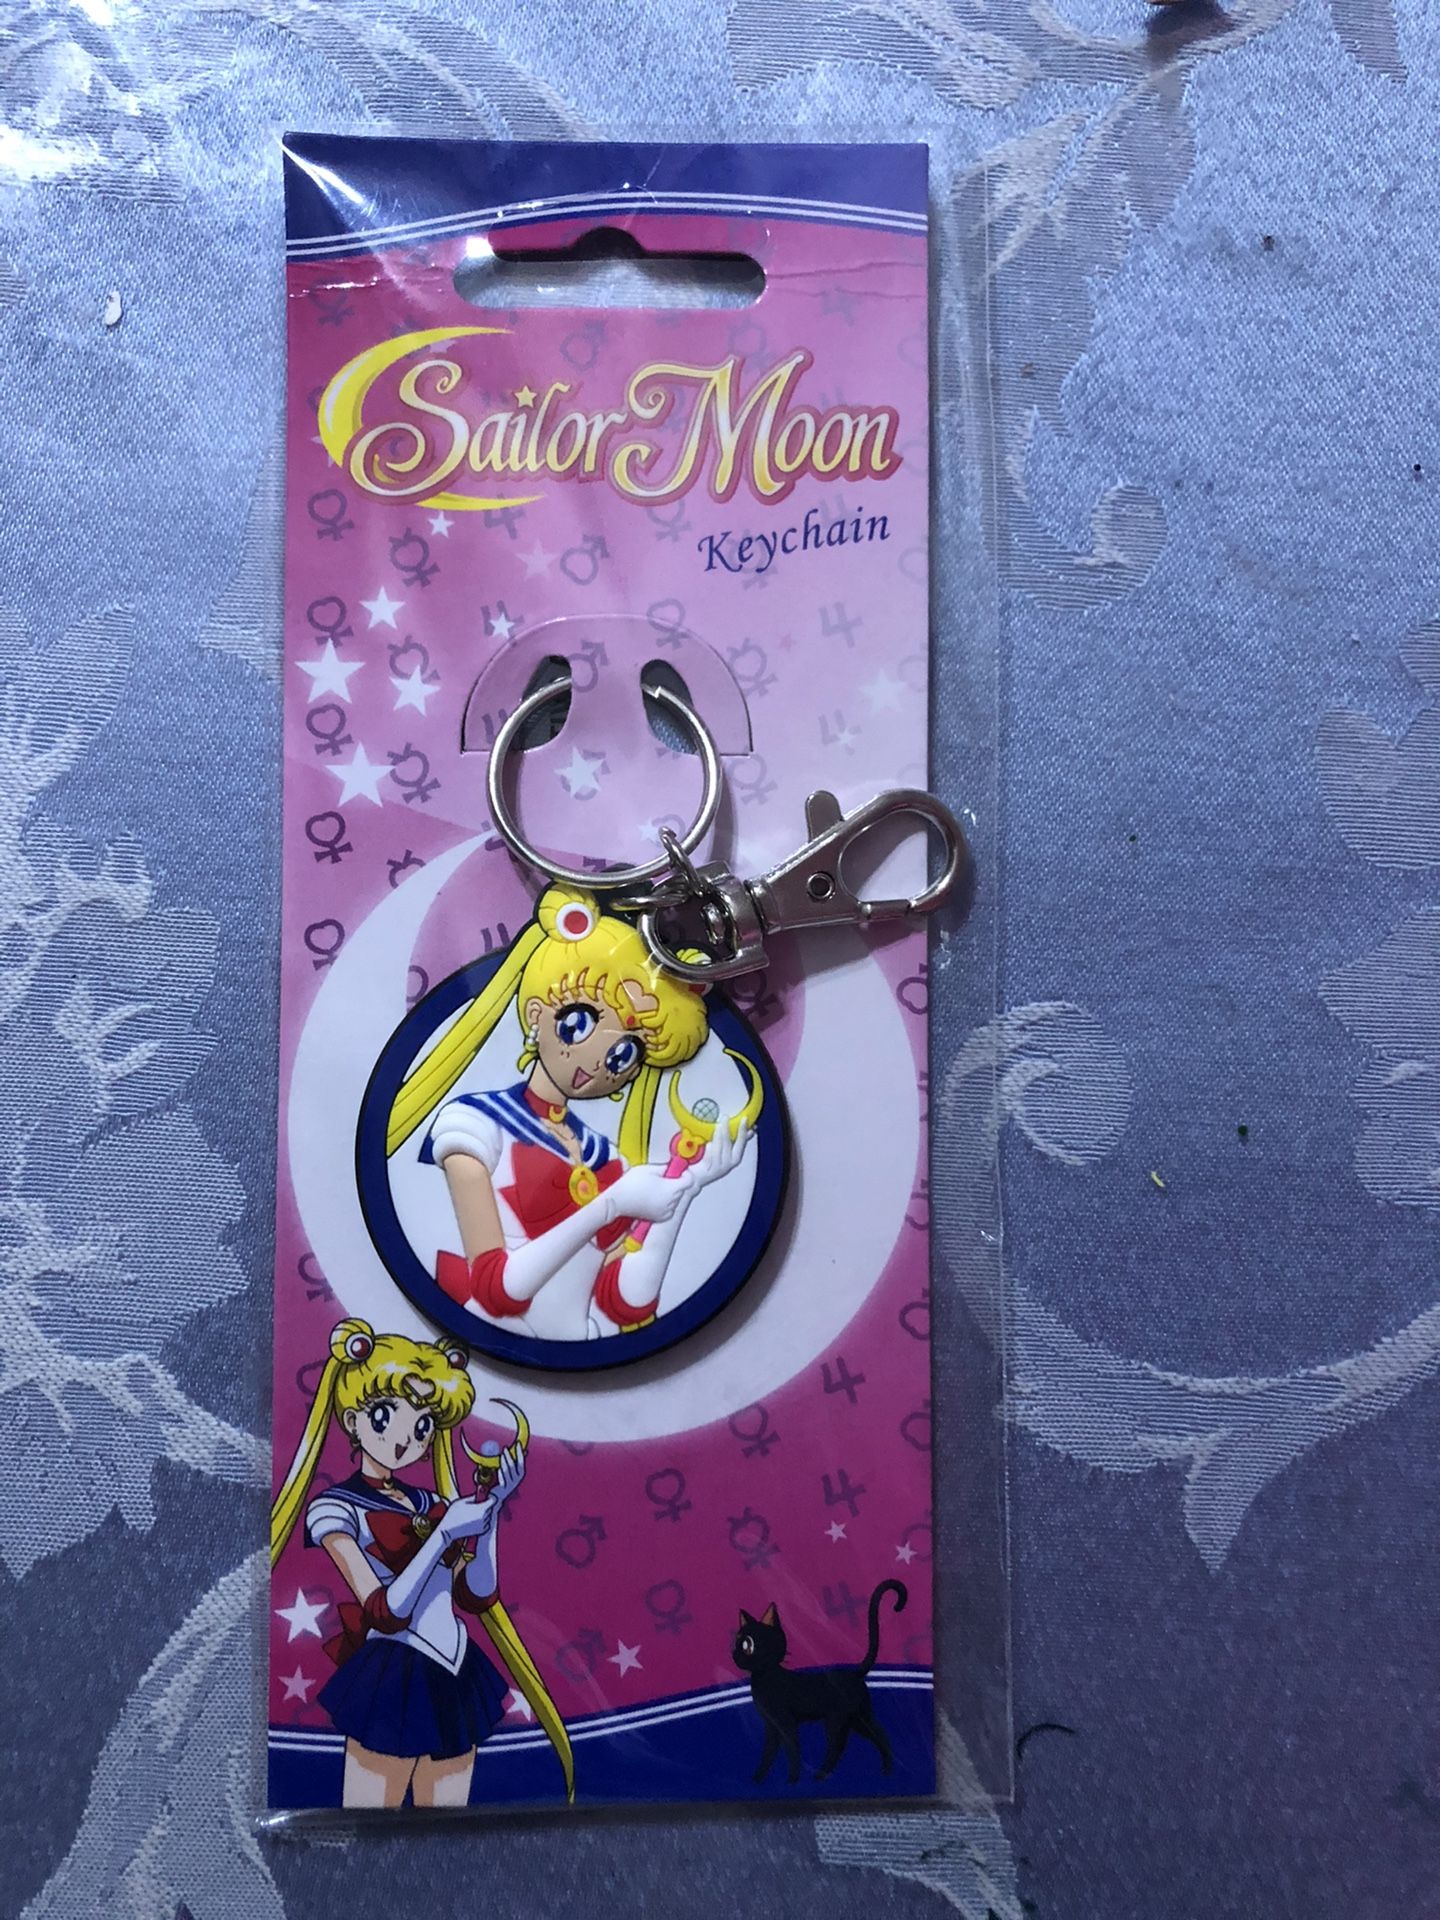 Sailor Moon keychain